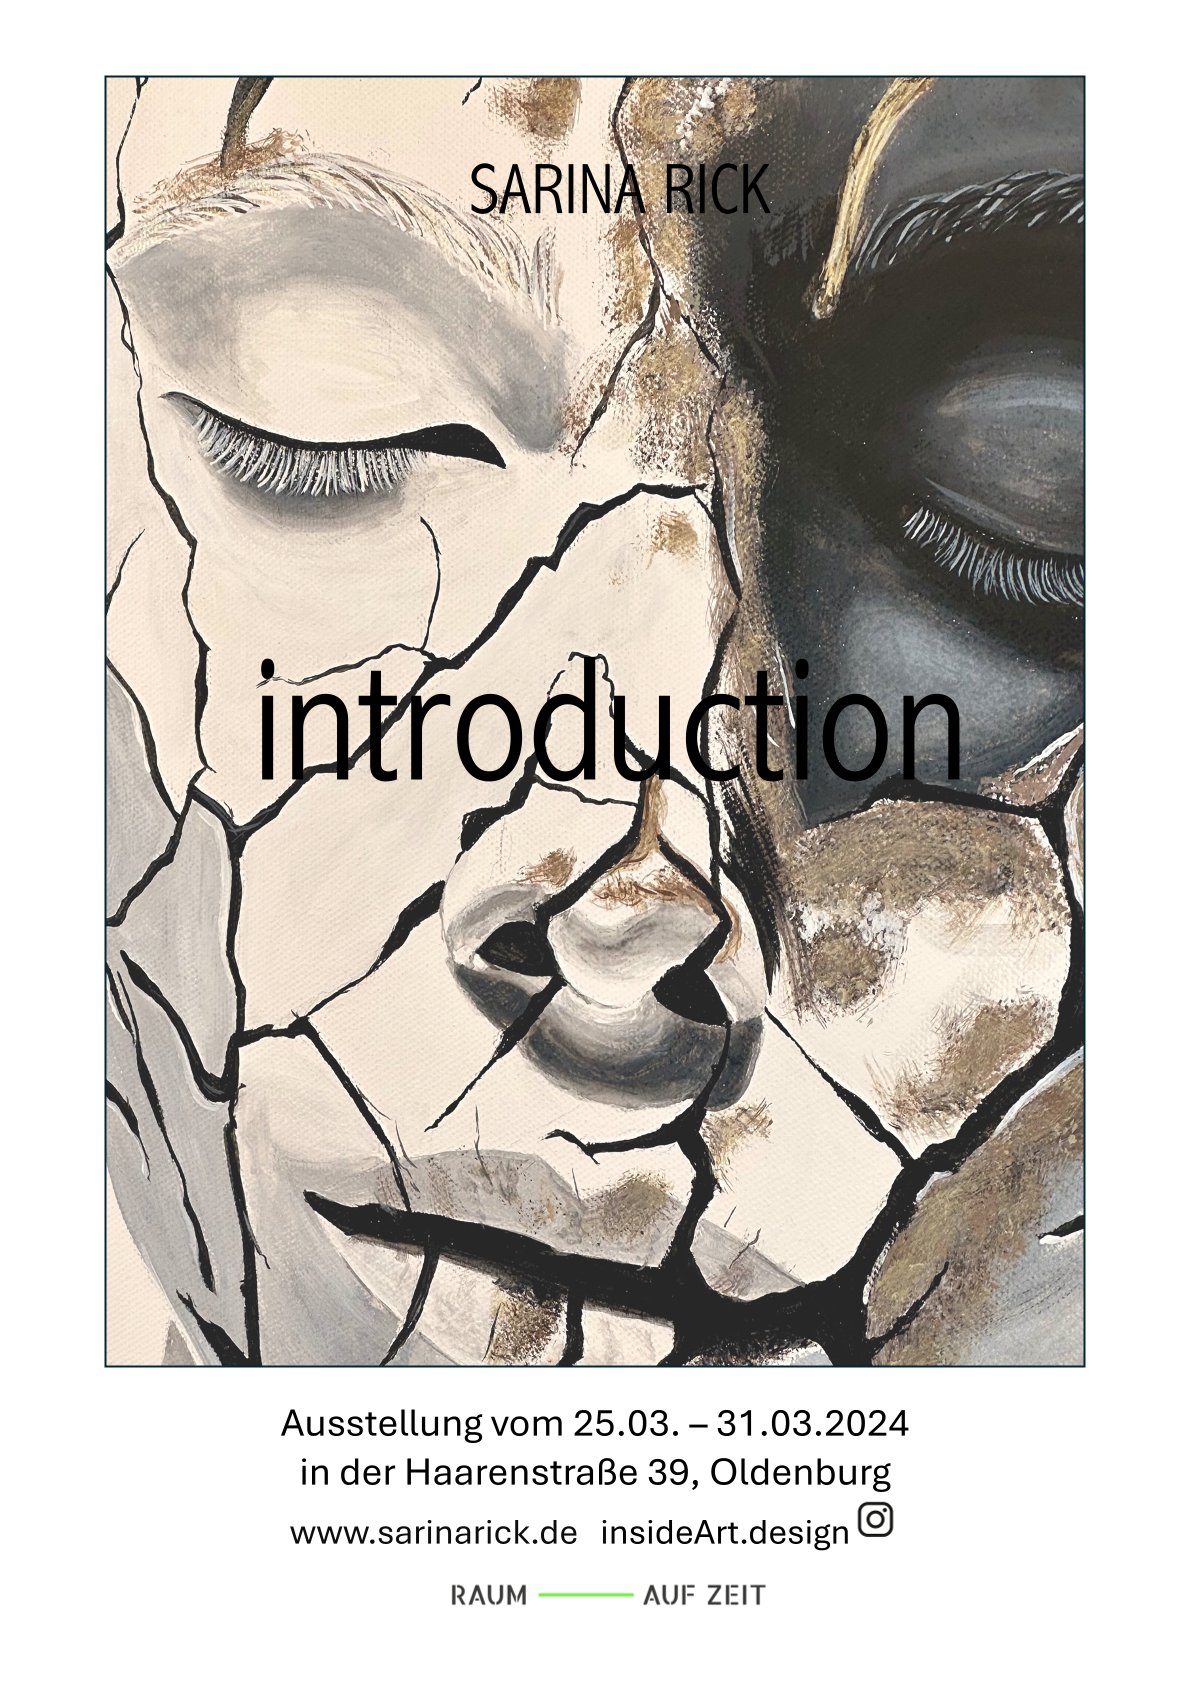 Flyer zur Ausstellung "introduction" Sarina Rick